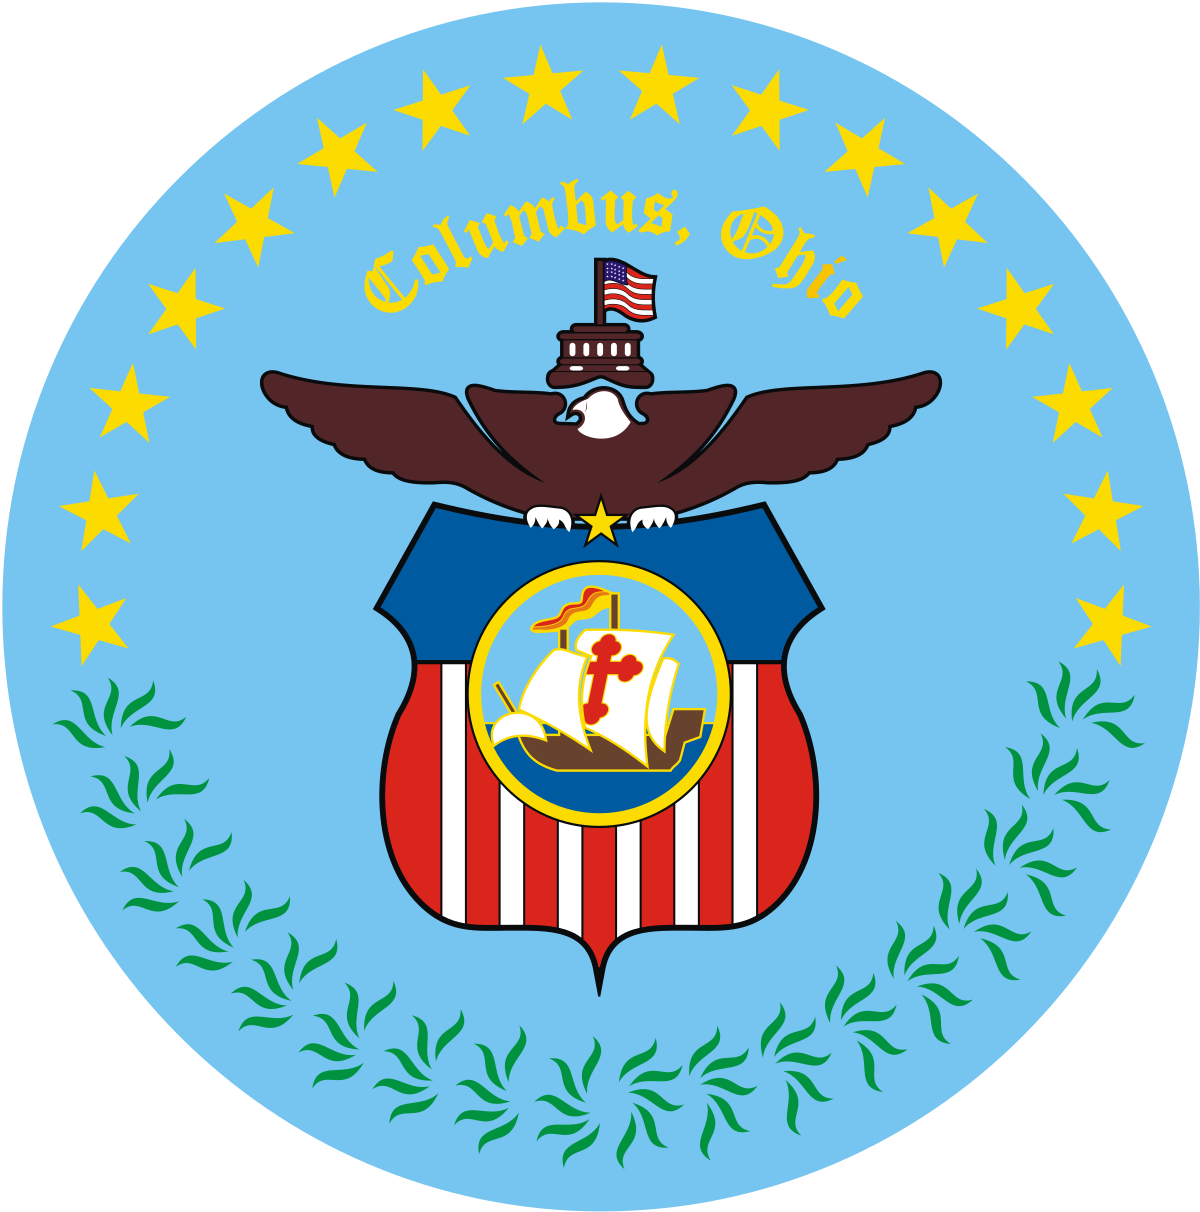 Columbus logo and seal